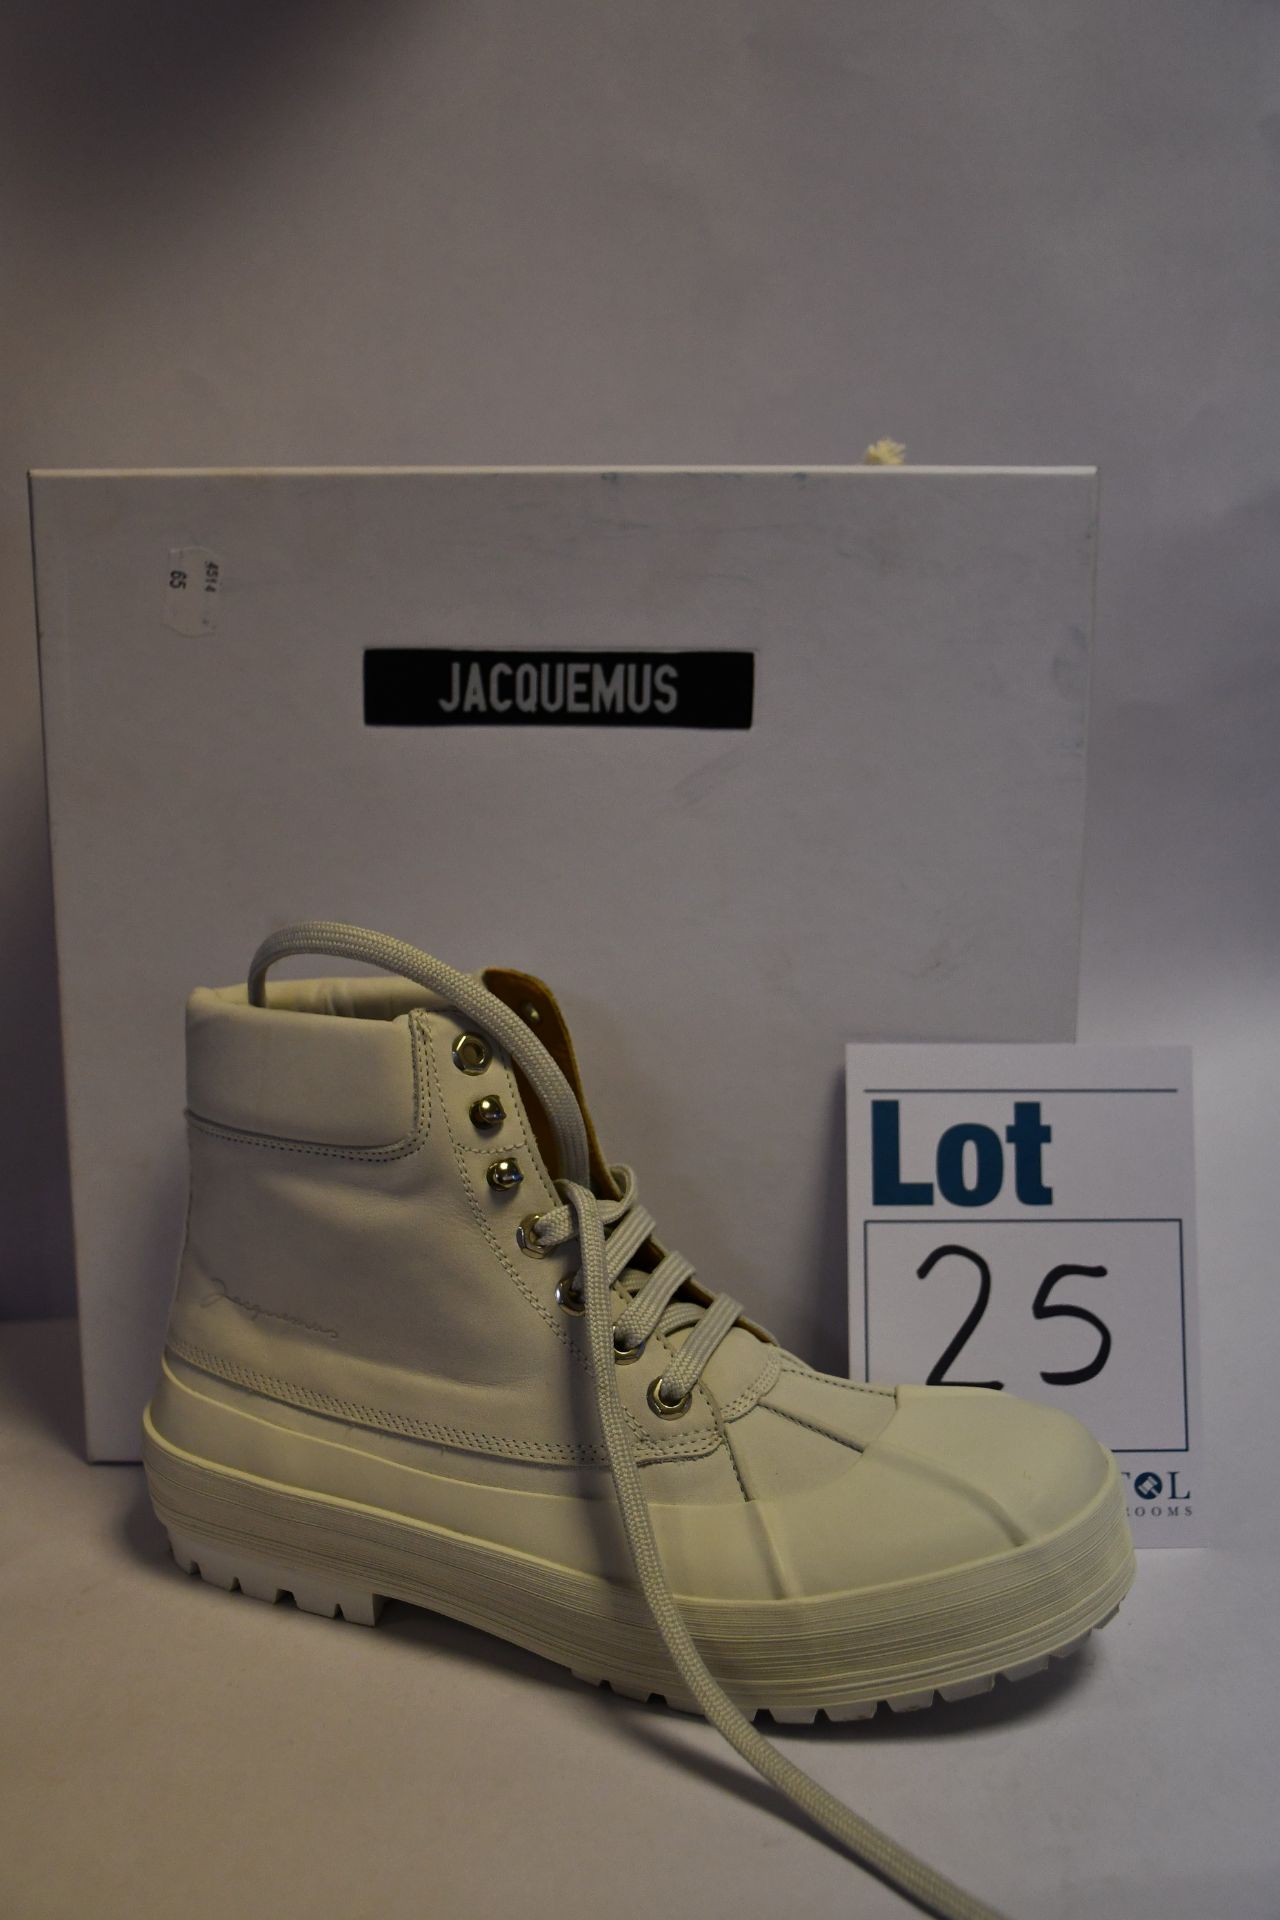 A pair of as new Jacquemus Les Meuniers Hautes leather boots (EU 40).